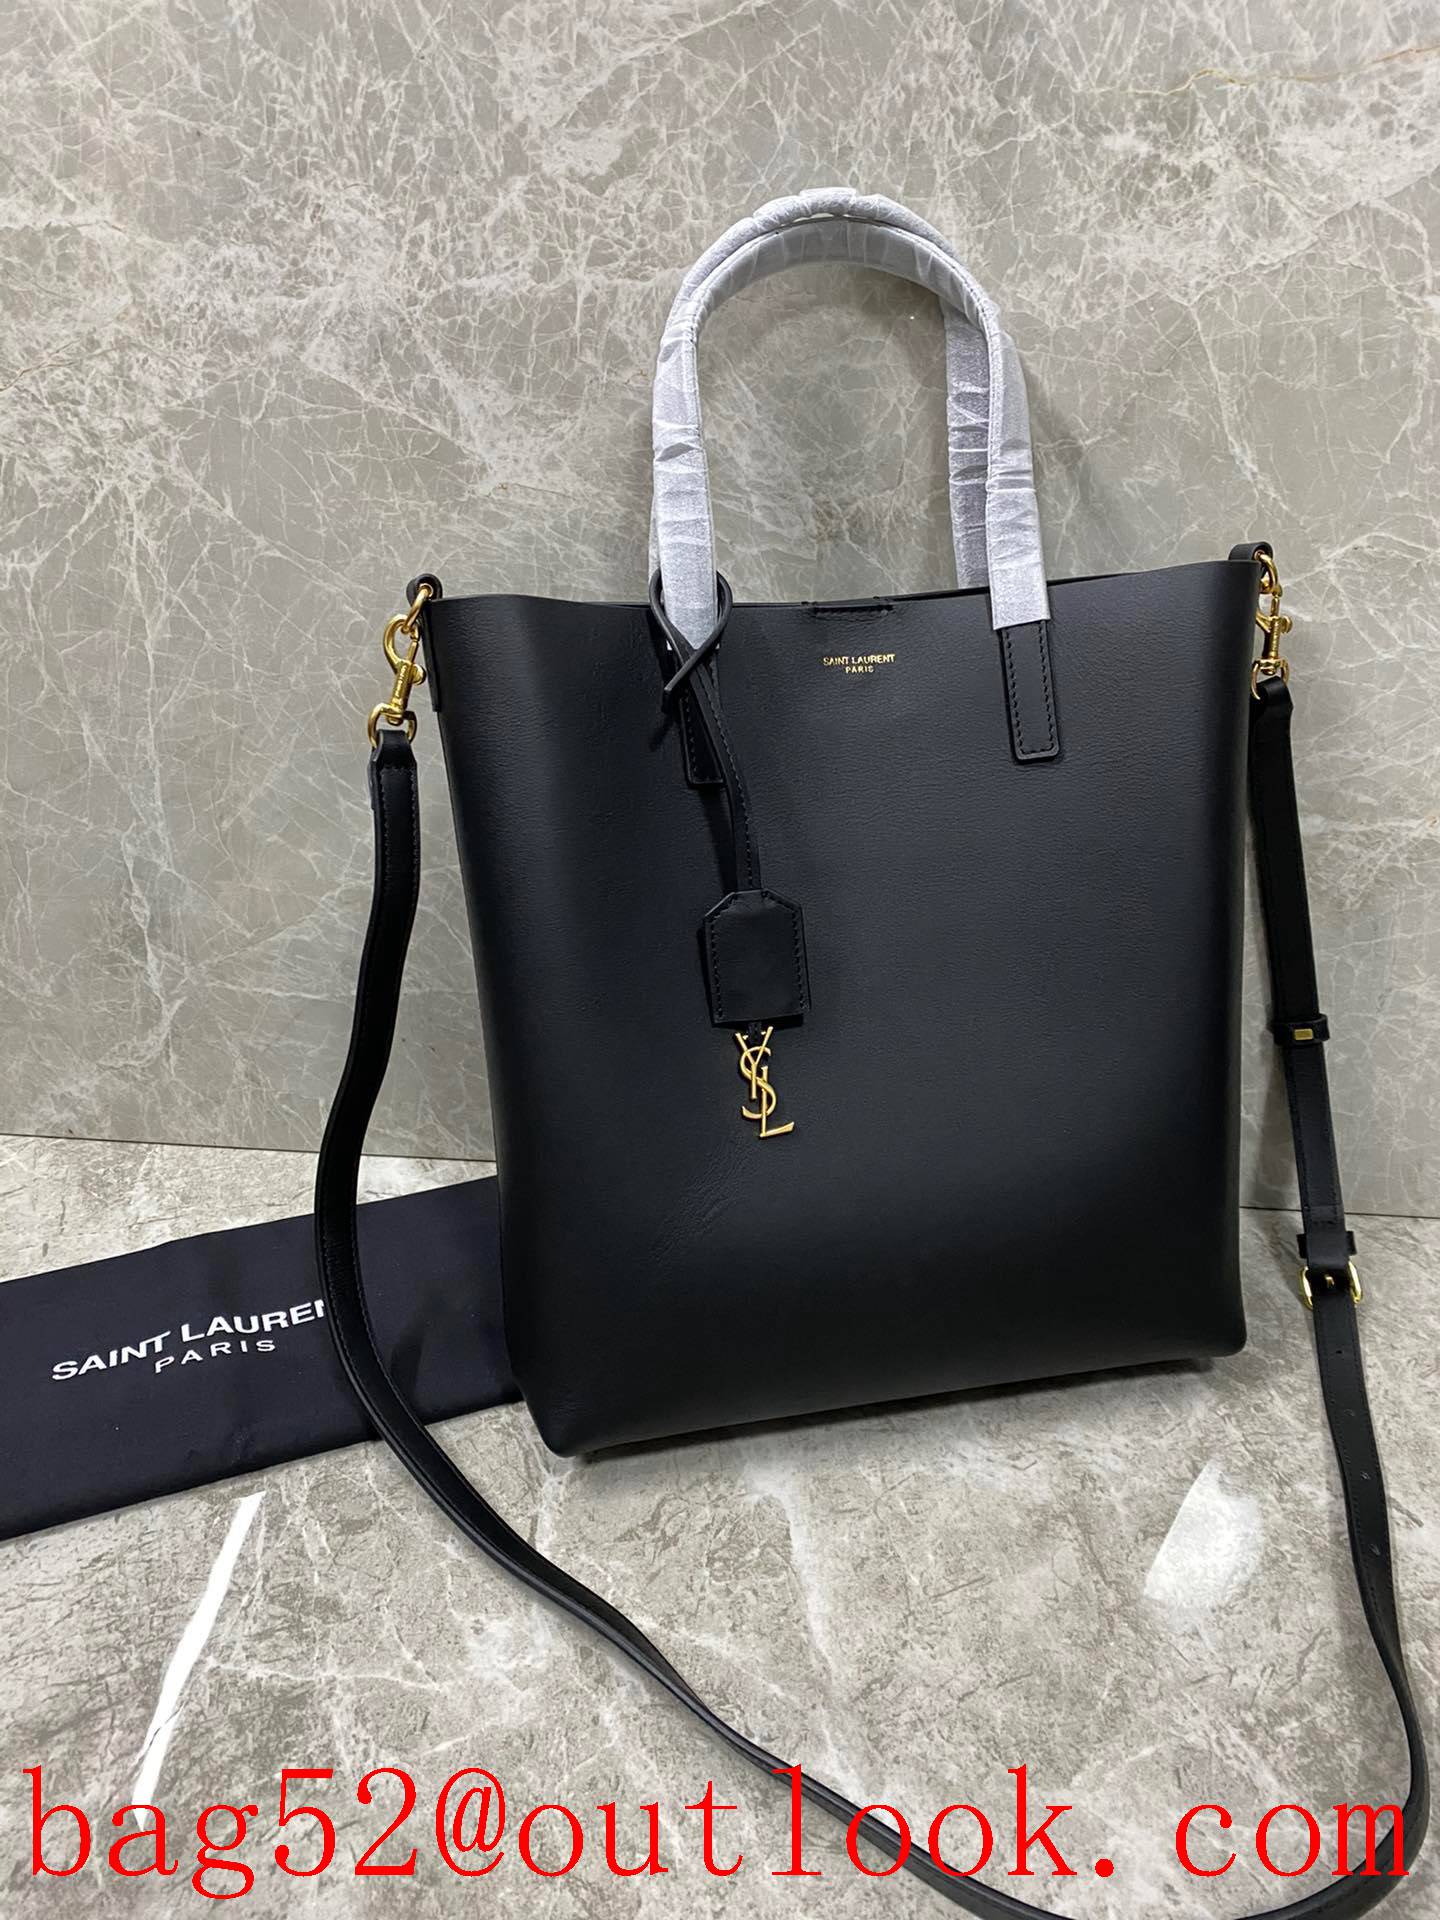 YSL Saint Laurent Real Leather Shopping Tote Bag Handbag Black 394193